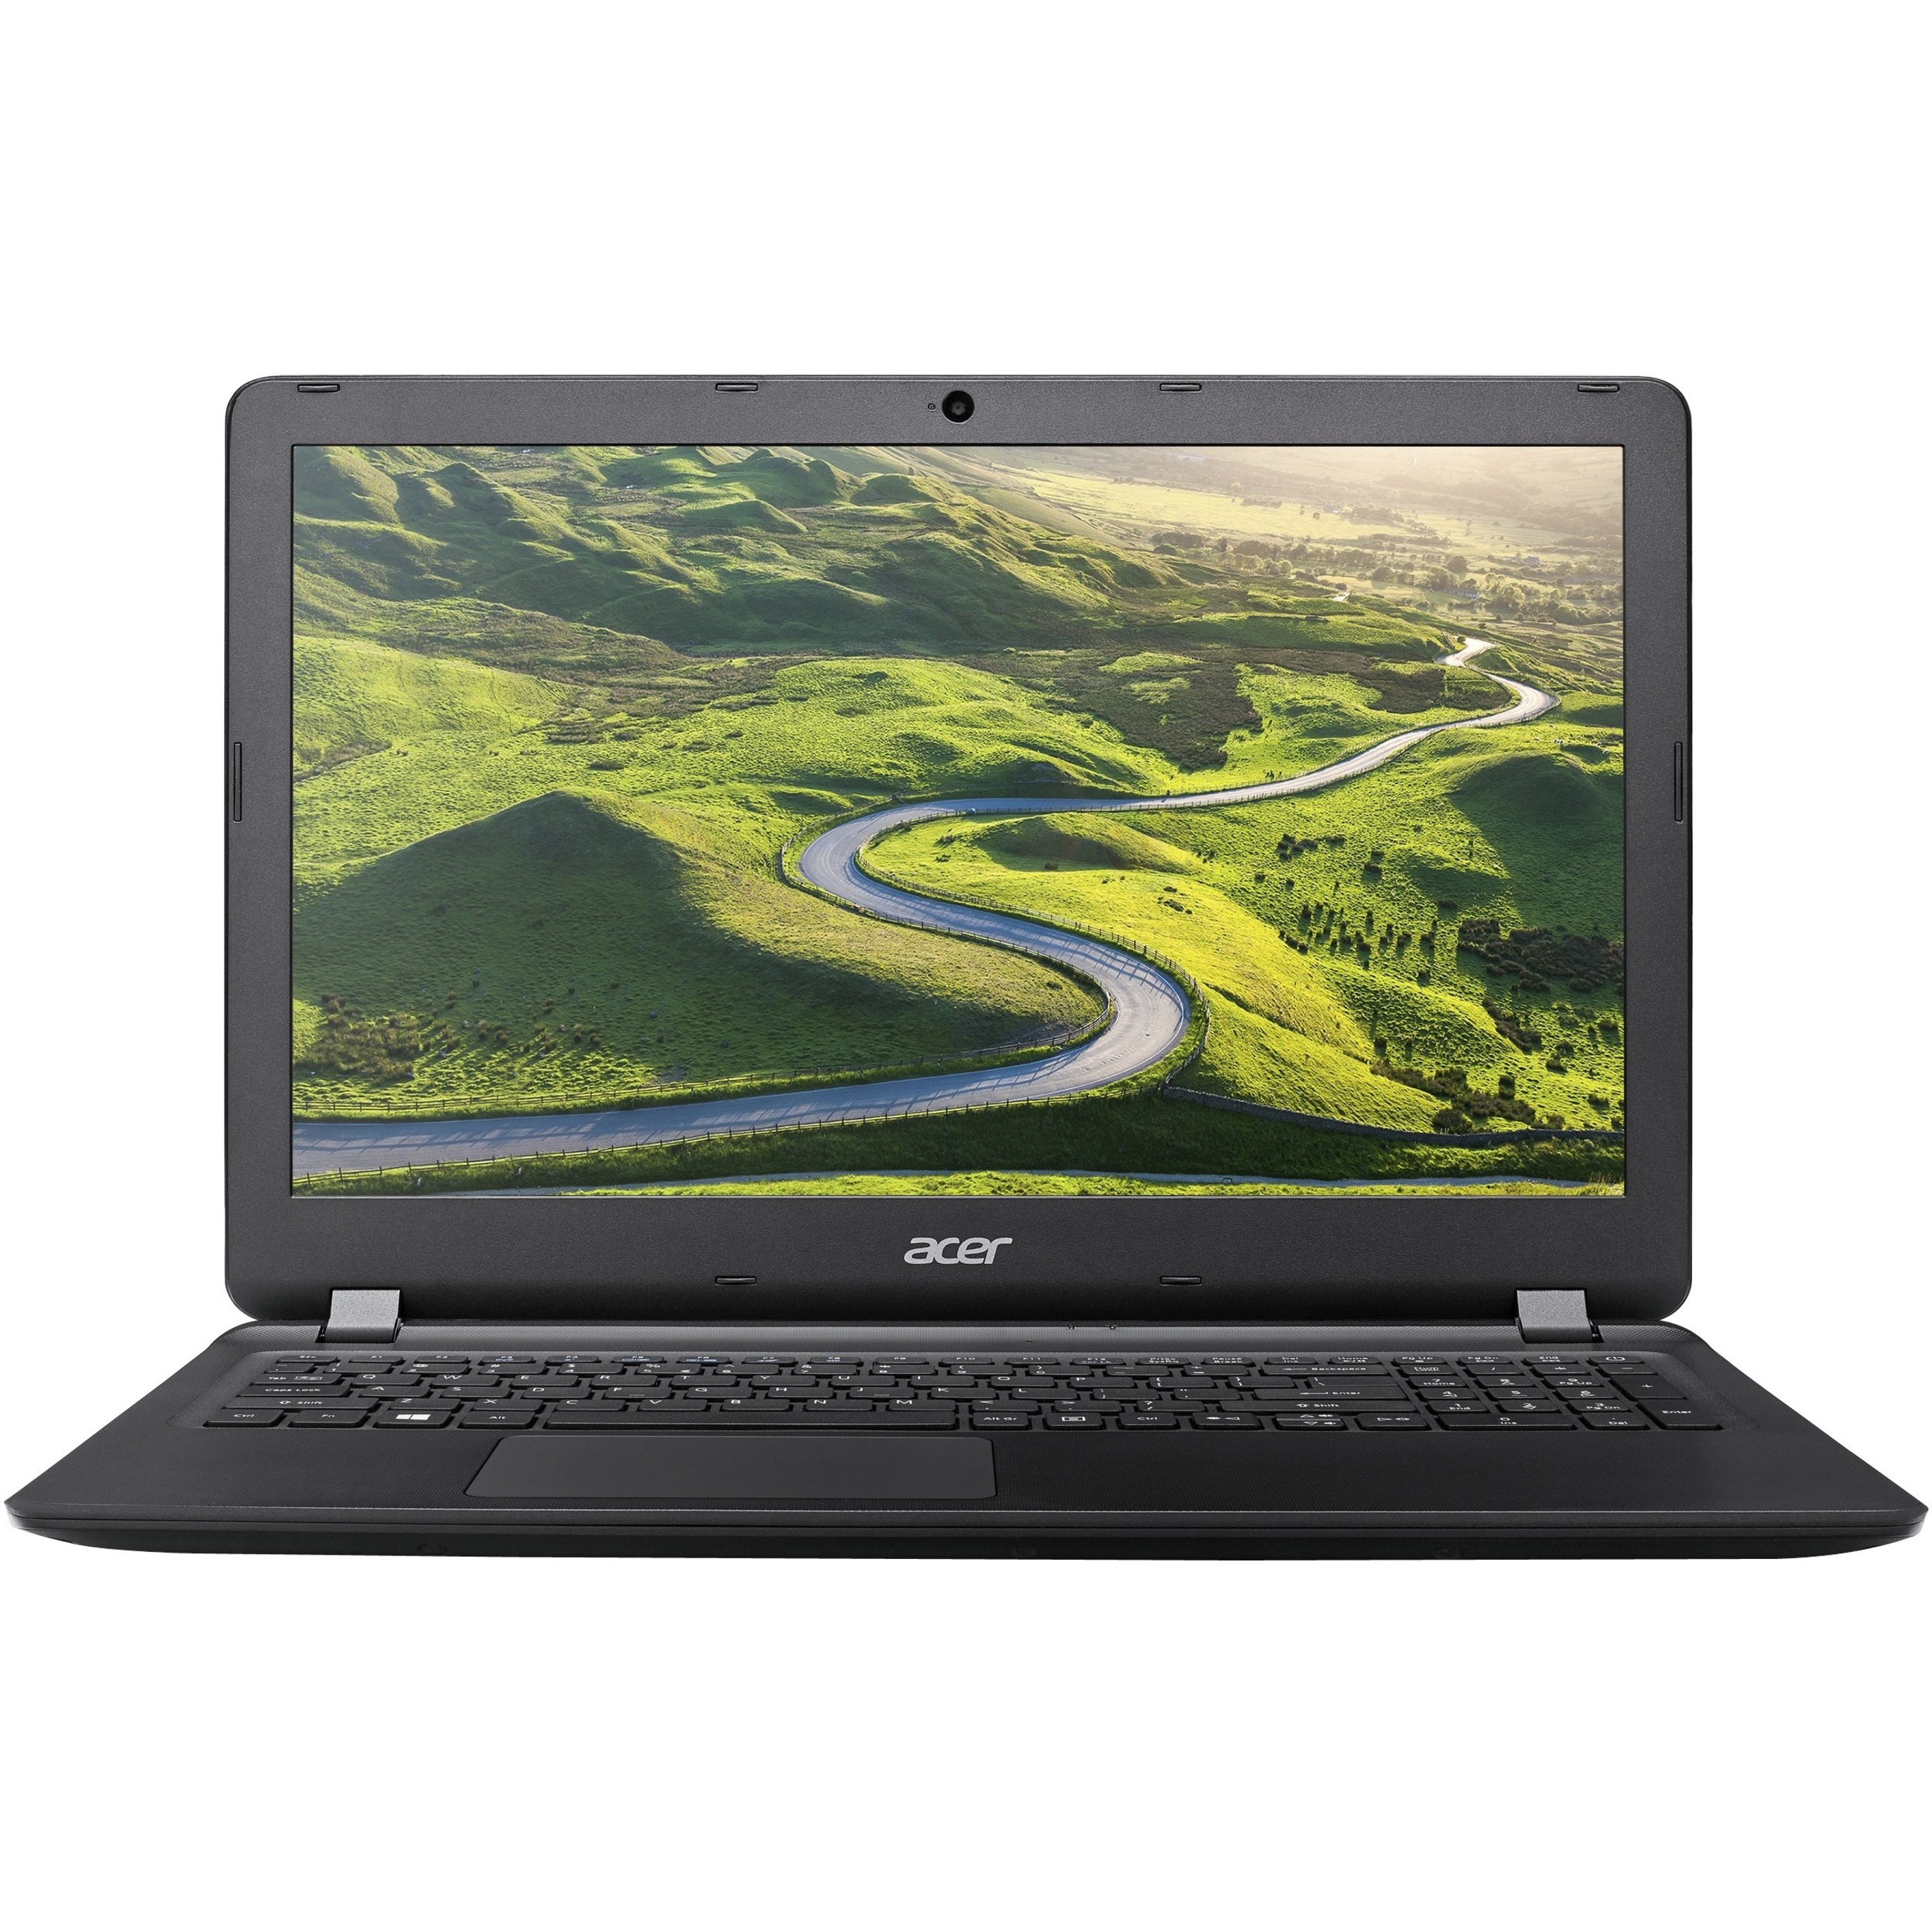 Acer Aspire 15.6" Laptop, Intel Celeron N3350, 500GB HD, DVD Writer, Windows 10 Home, ES1-533-C3VD - image 4 of 7